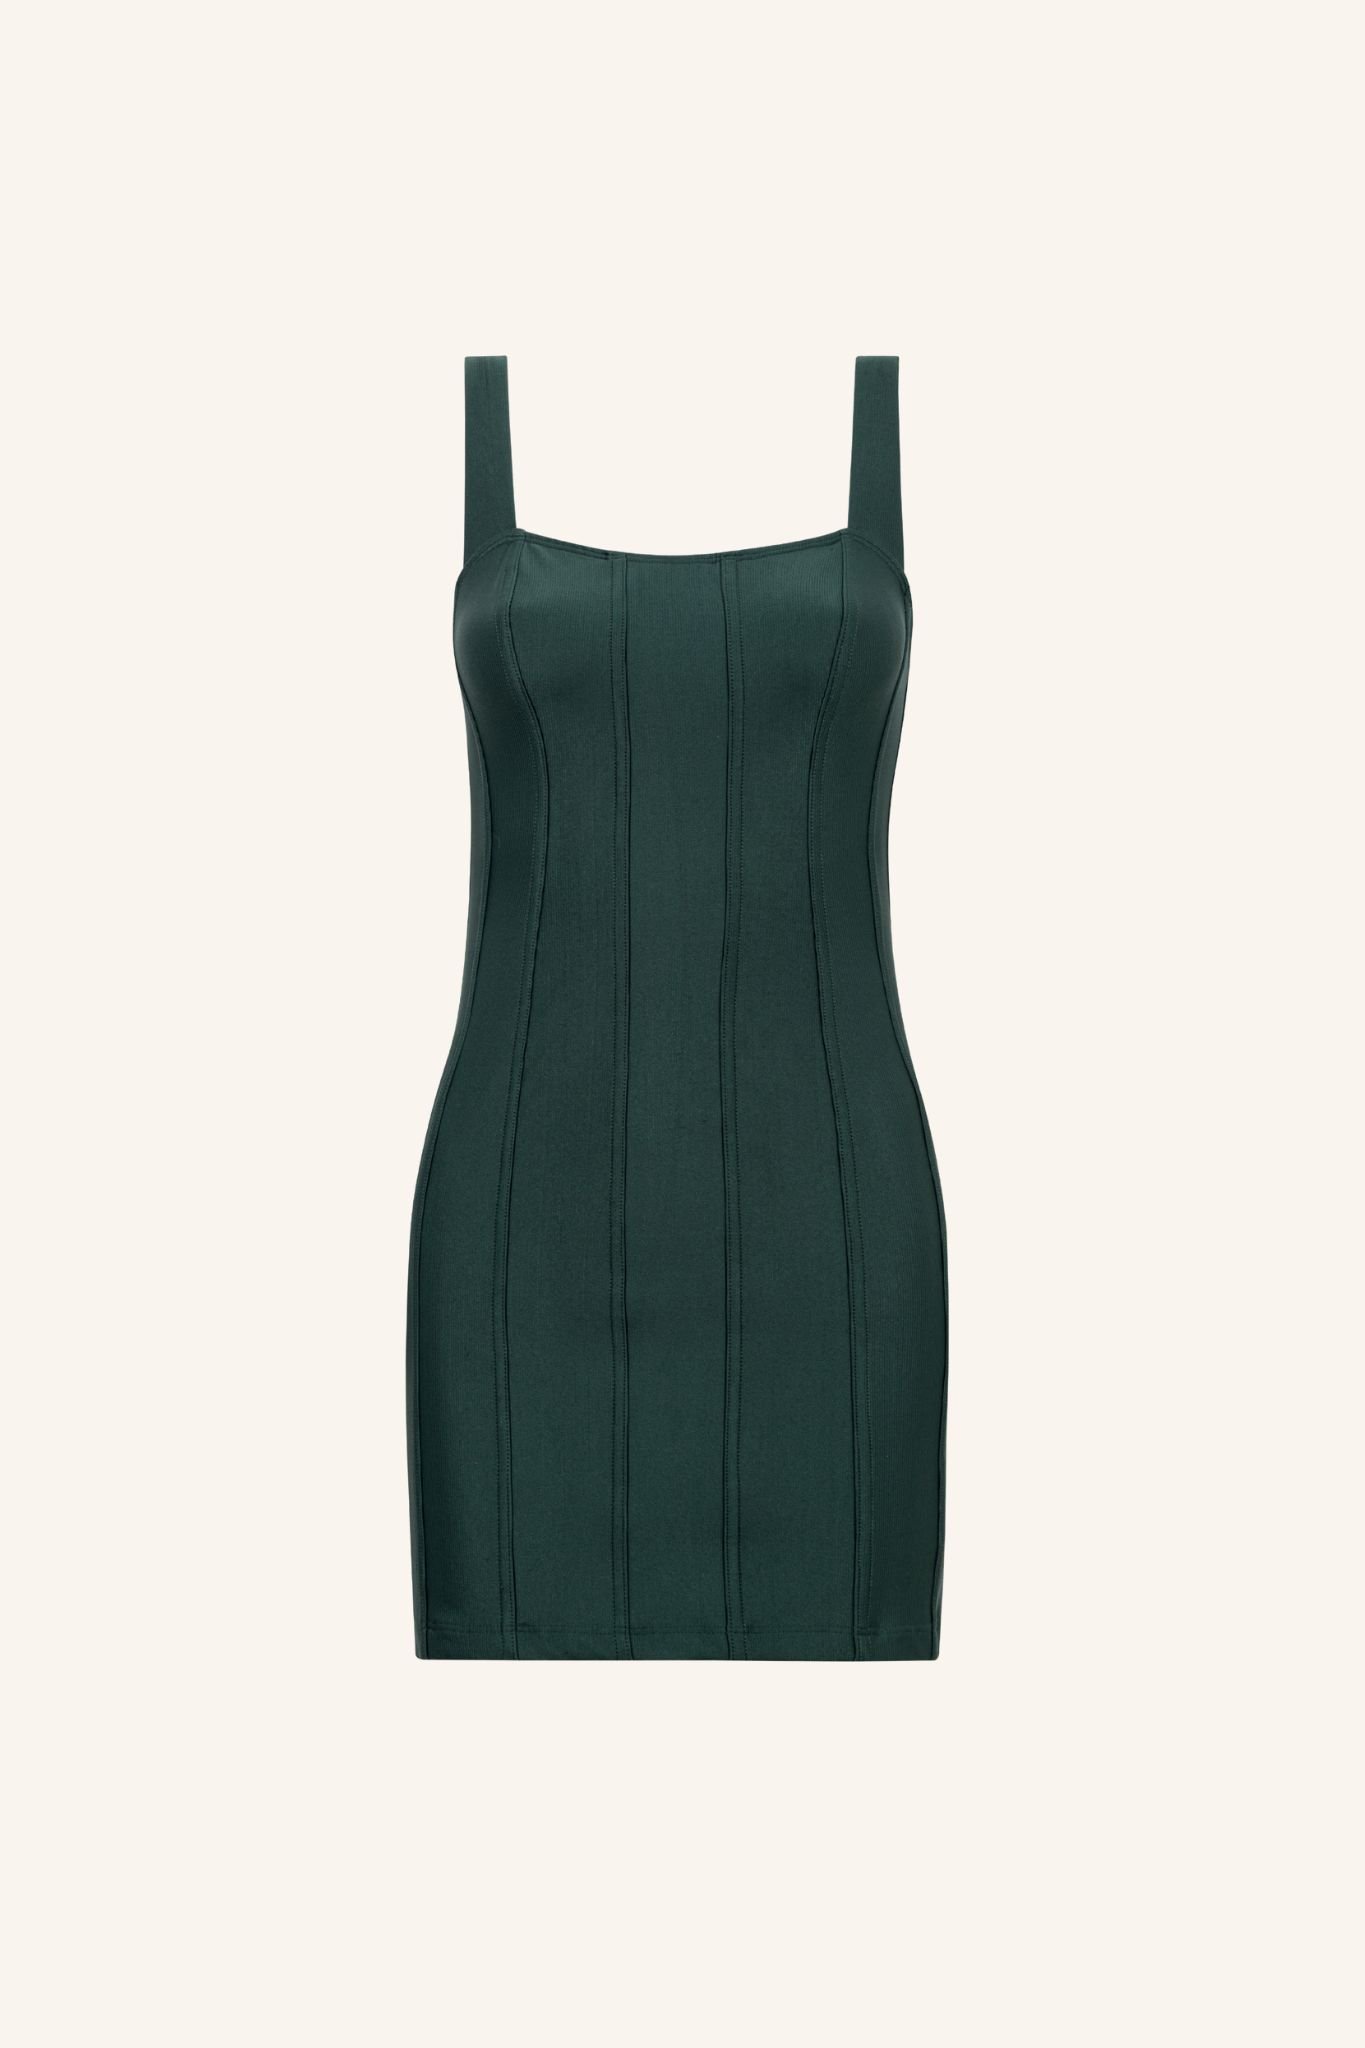 Lasso Loungewear - Top Lara Bicolor (Marfim com verde)